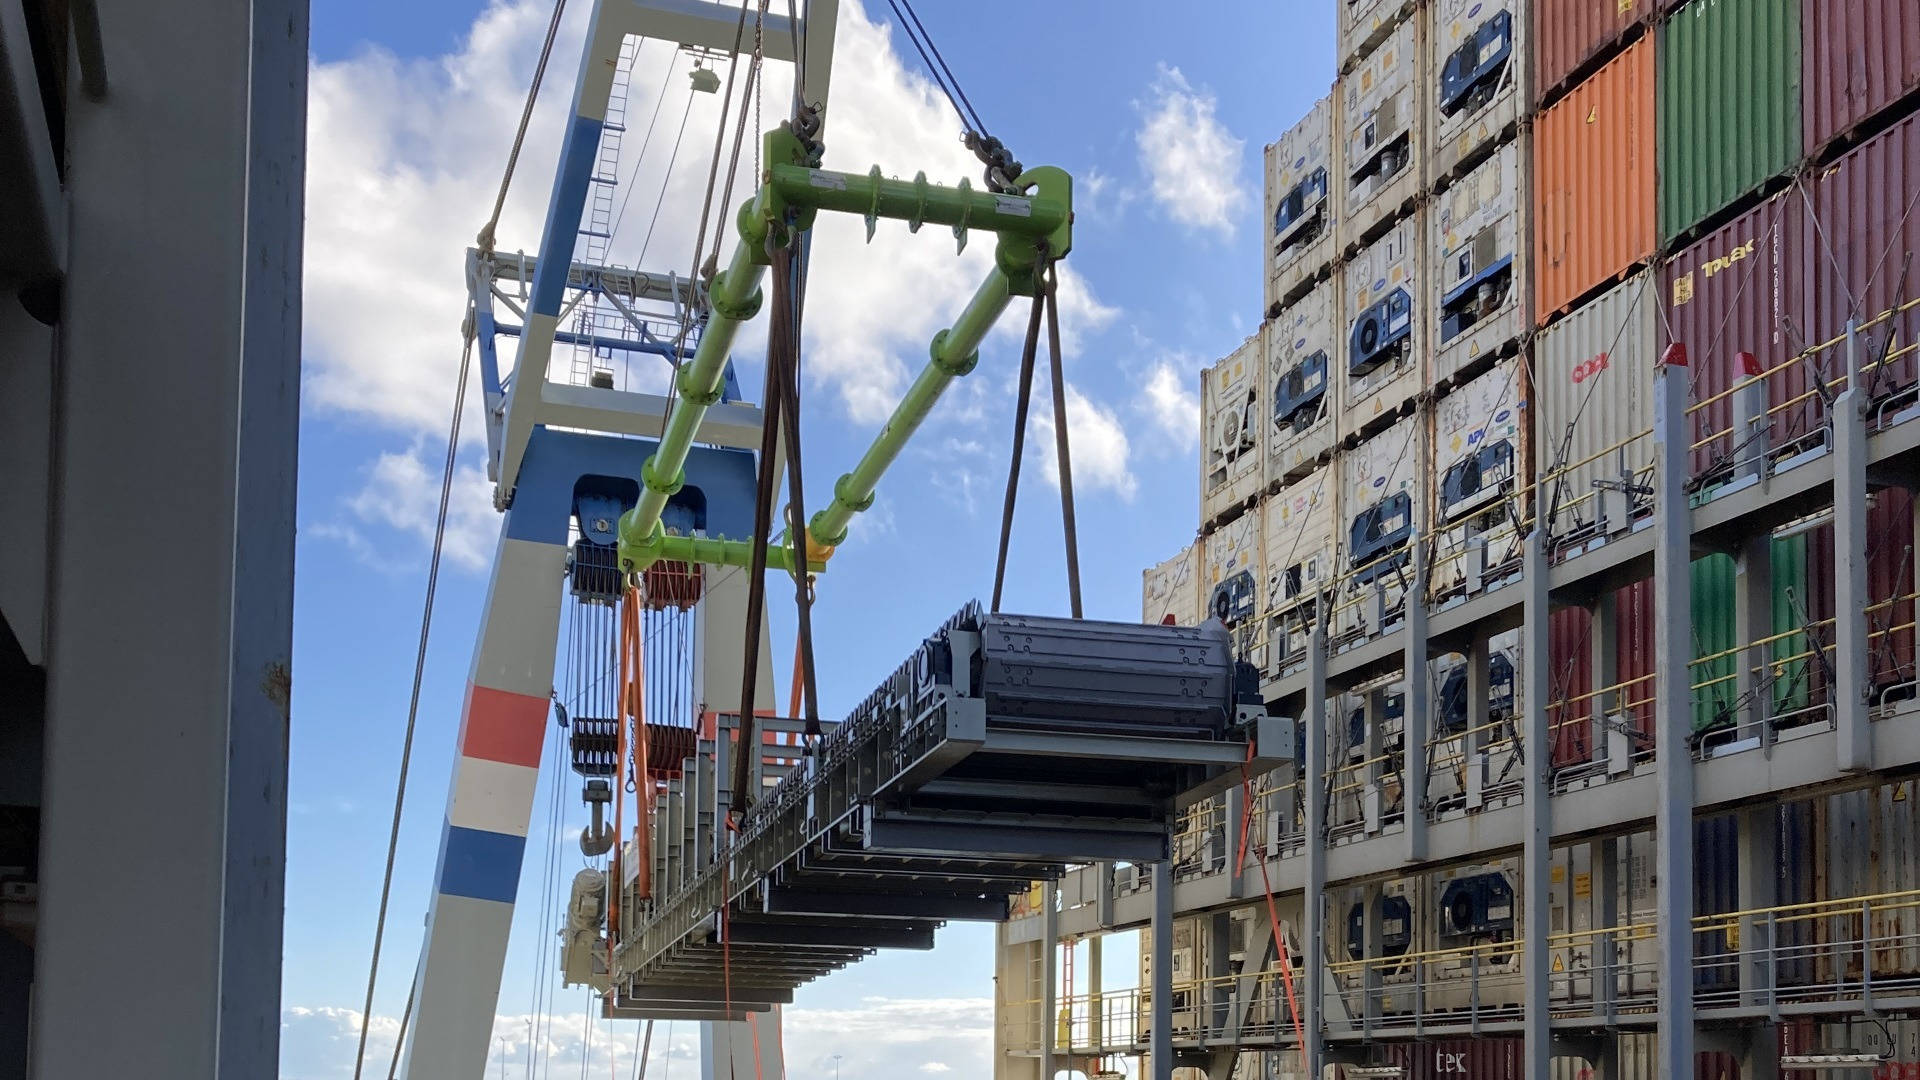 Van der Vlist dispatches conveyor belts to Singapore